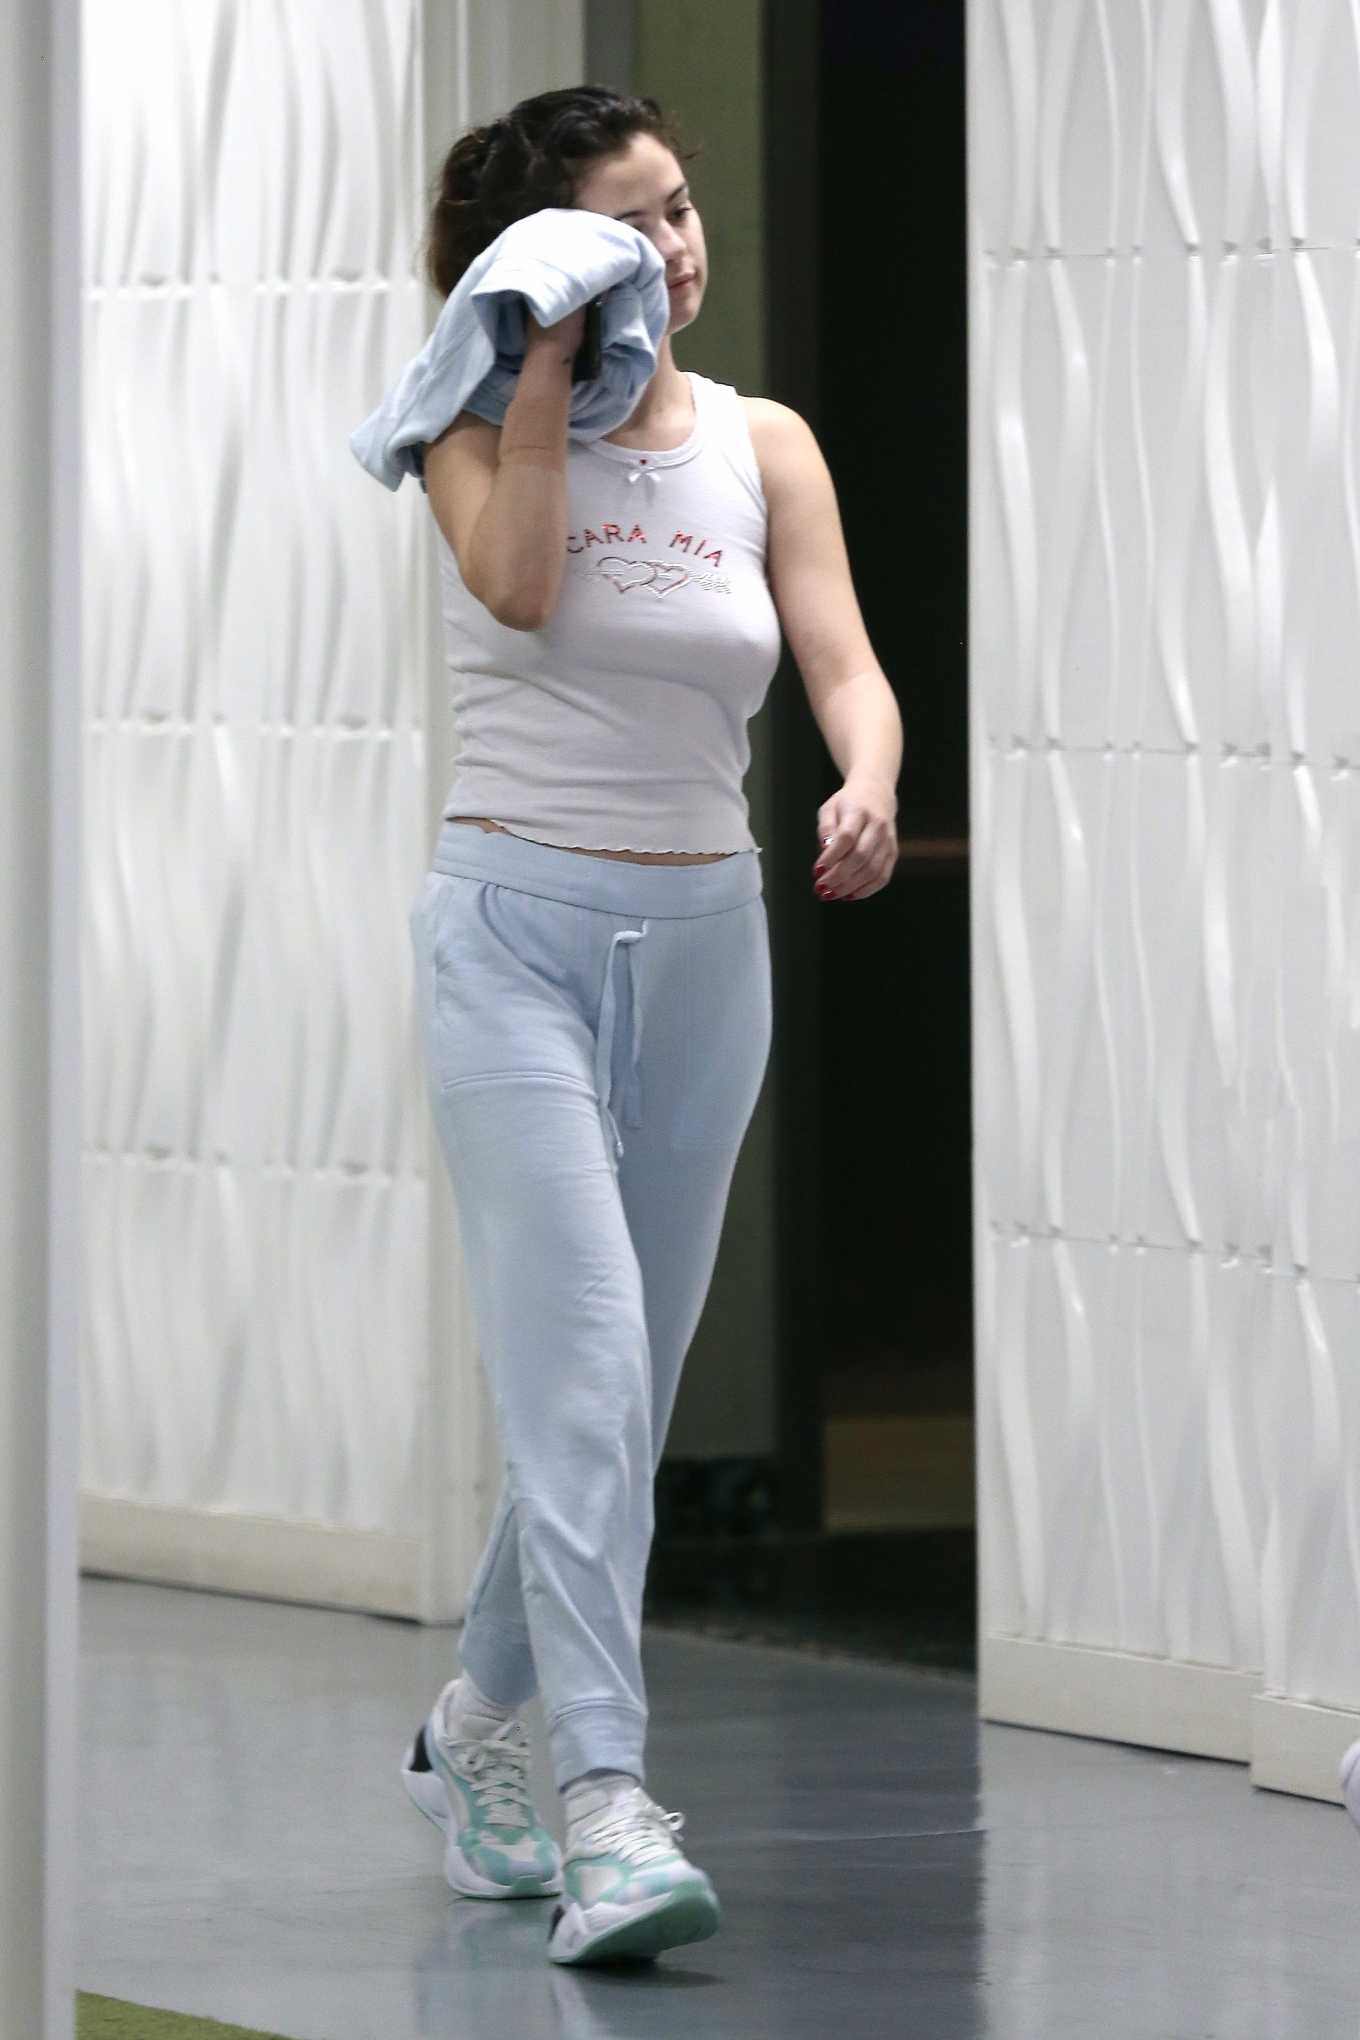 Selena Gomez â€“ Outside a Facility in Los Angeles